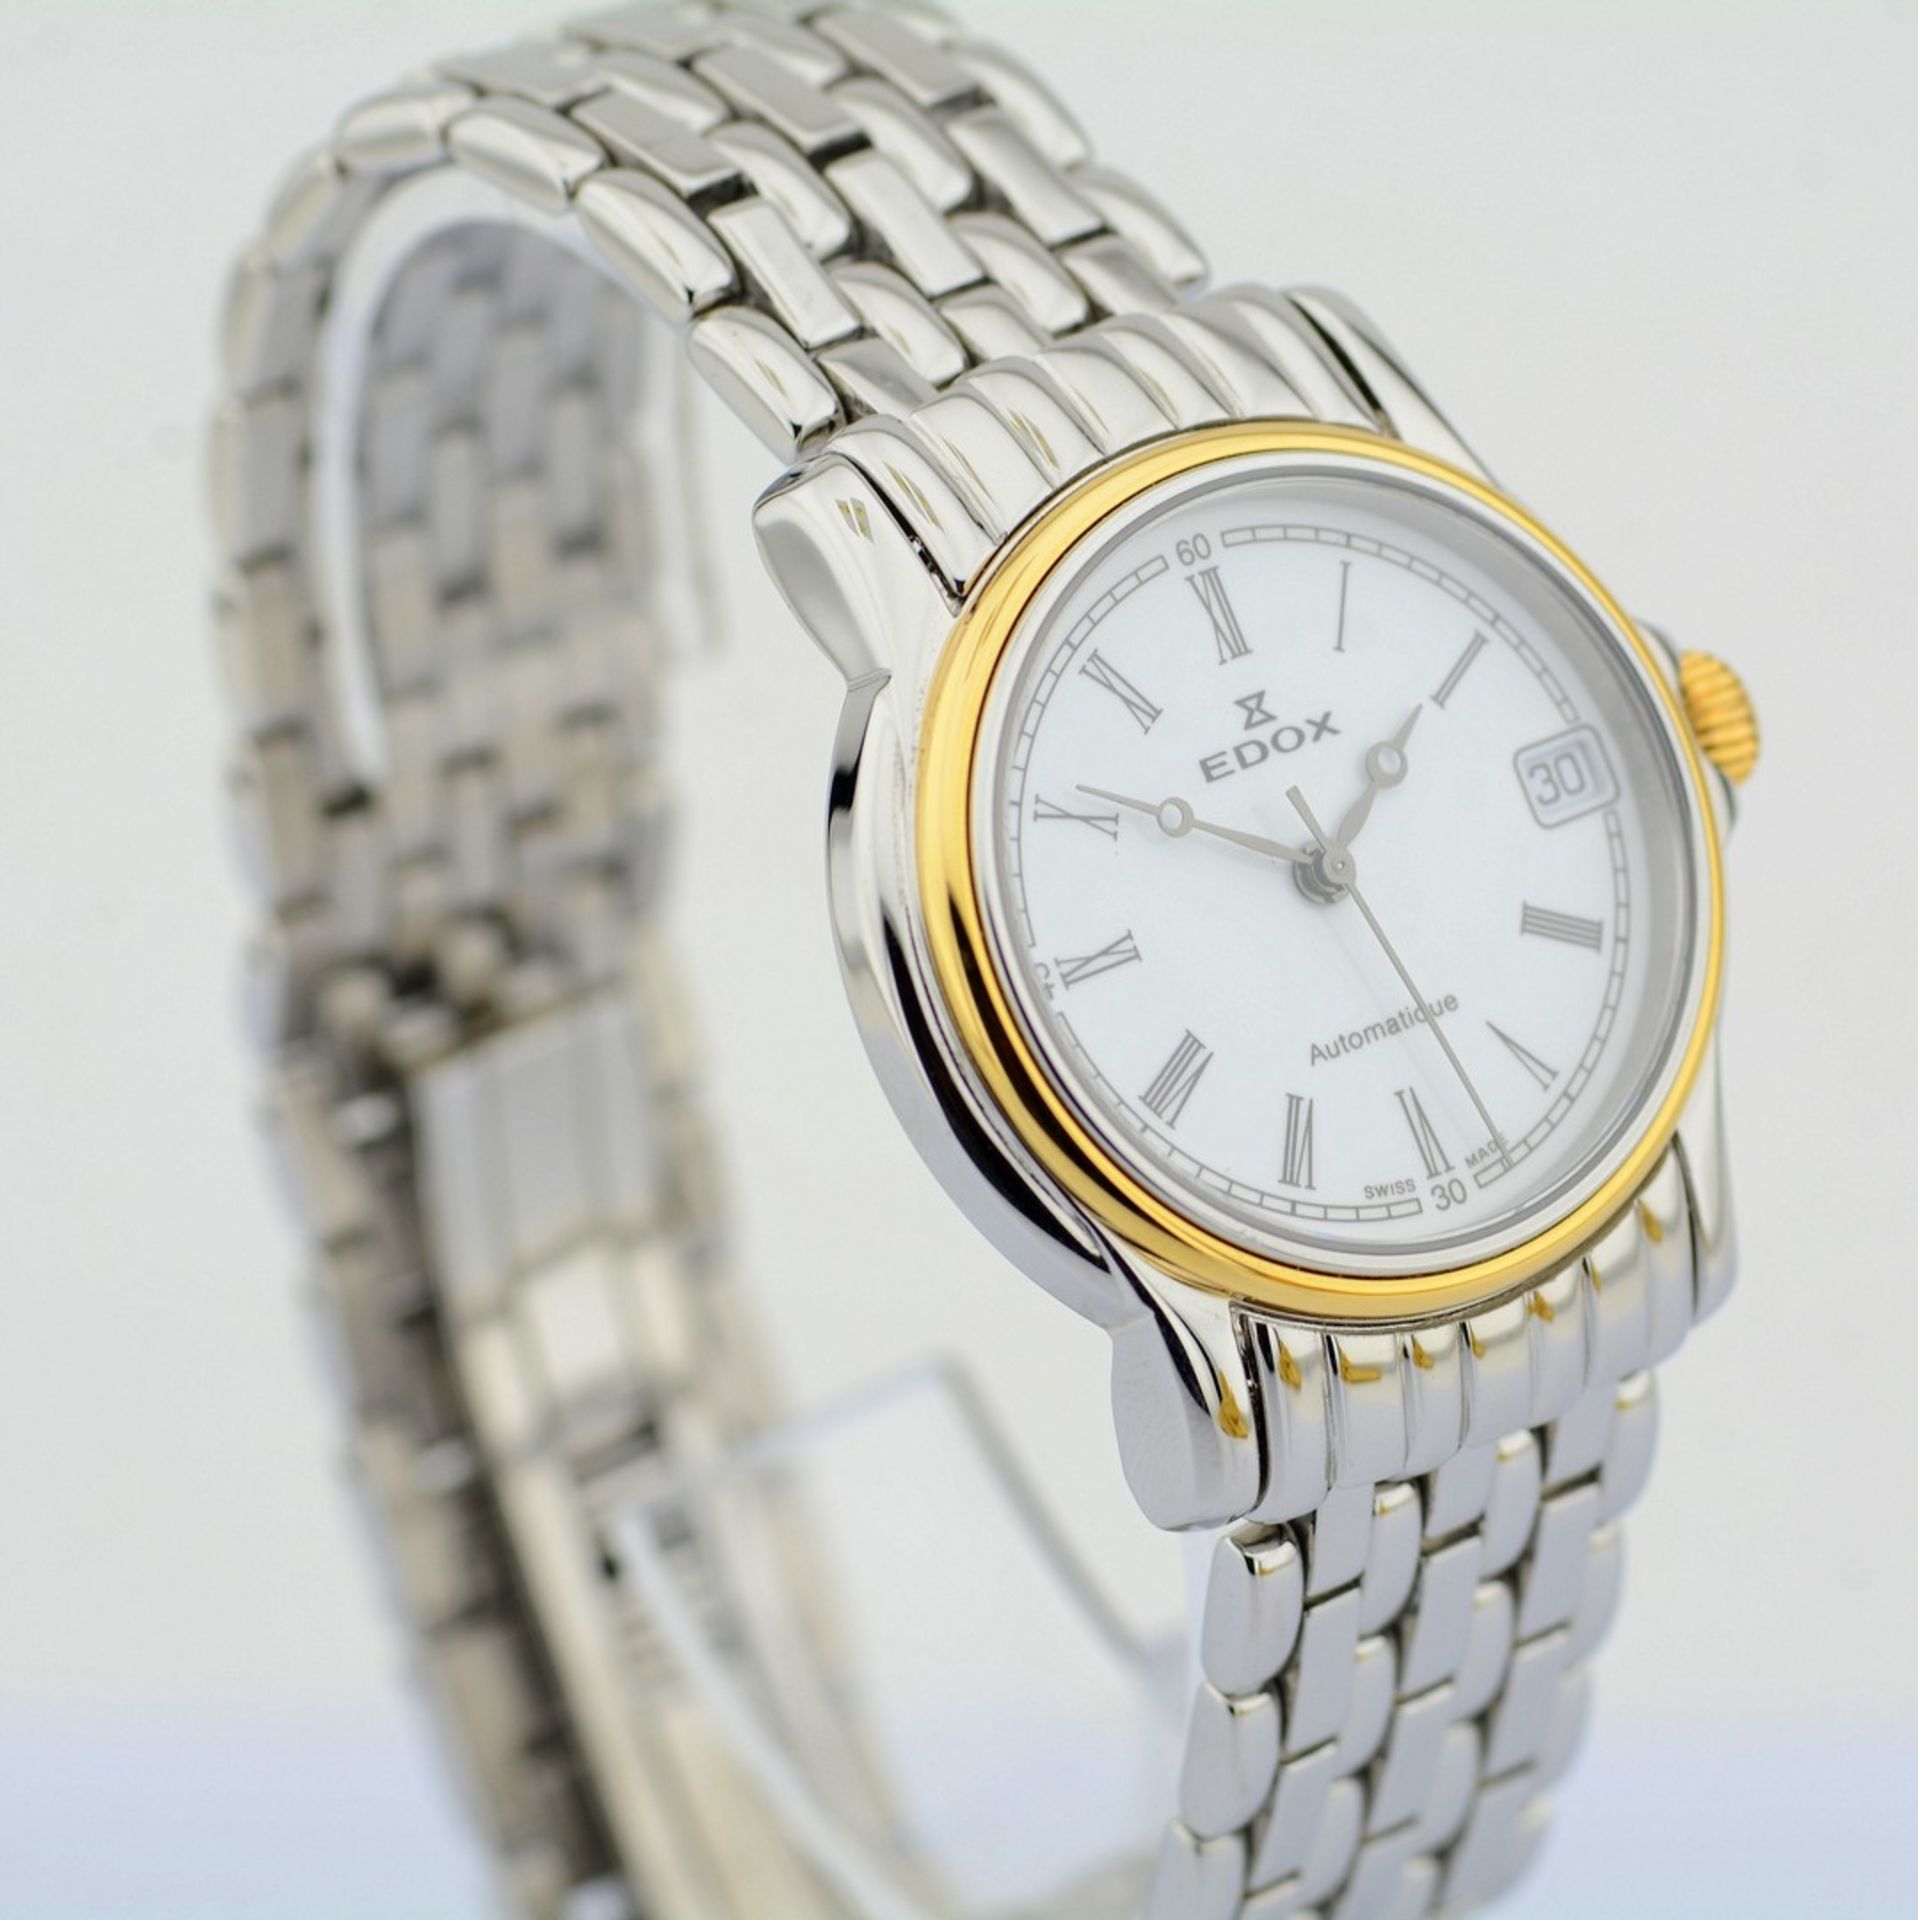 Edox / Automatic Date - Gentlemen's Gold/Steel Wristwatch - Image 4 of 5